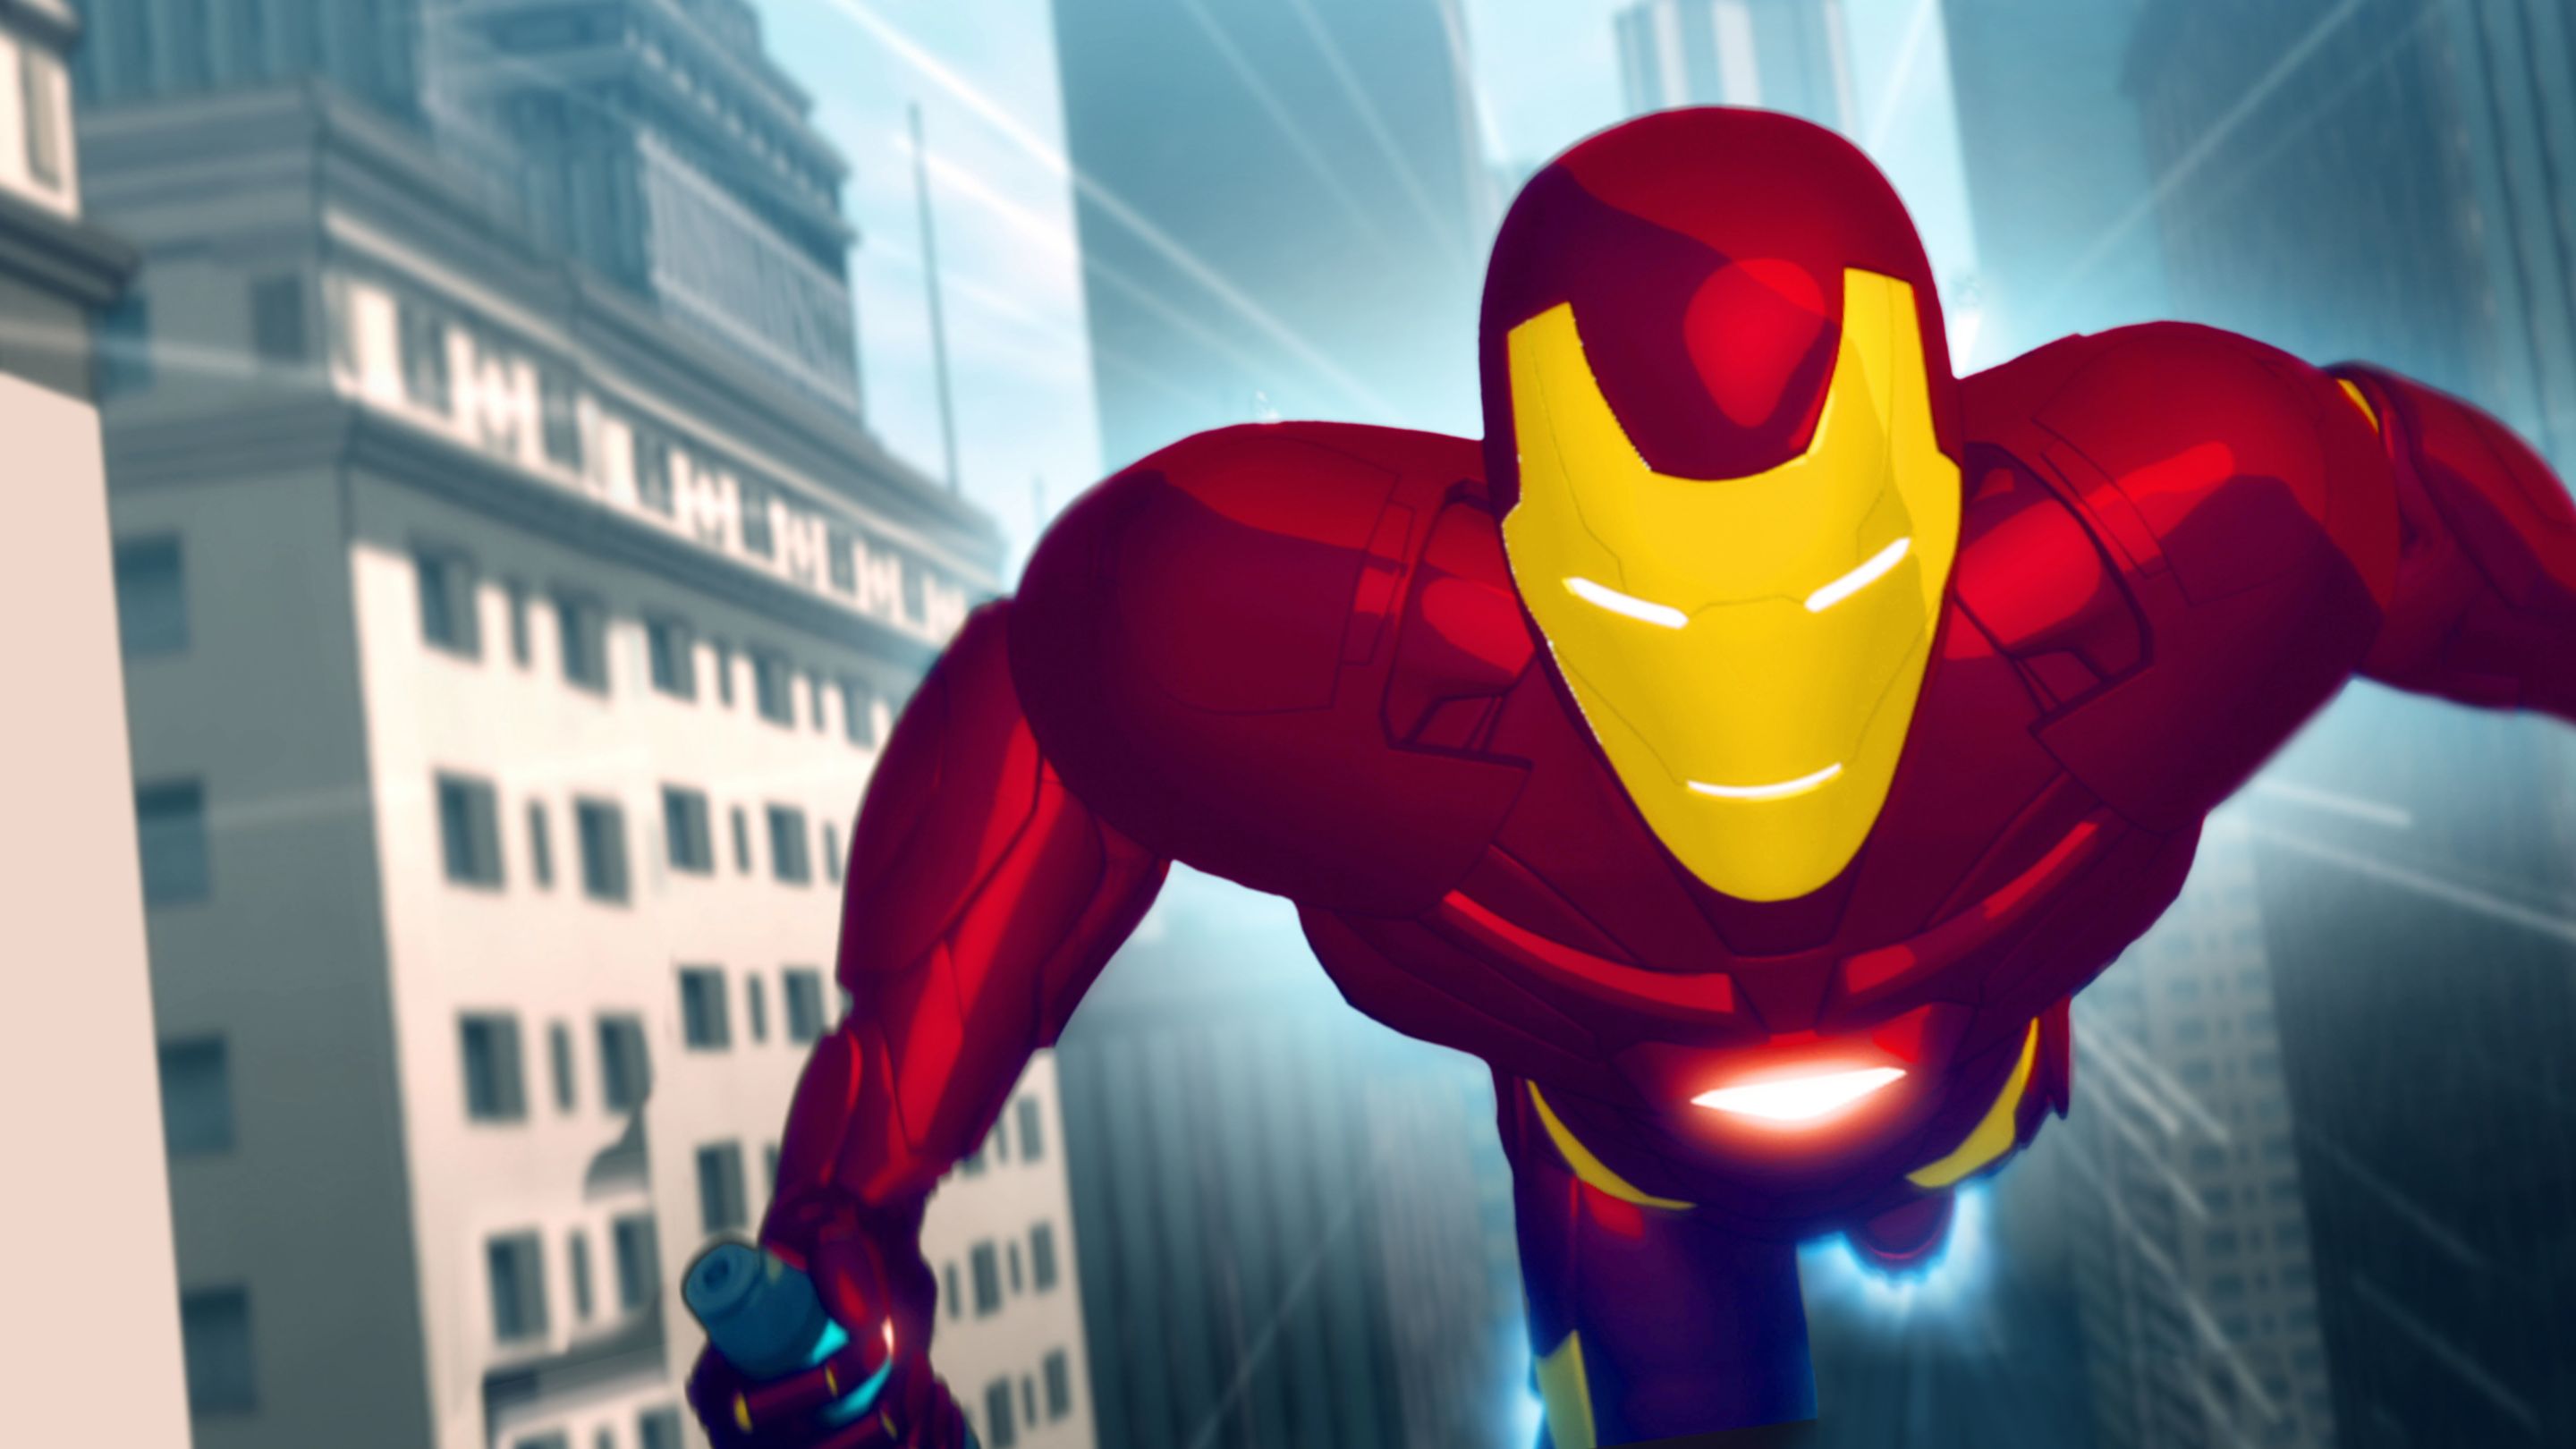 Watch Iron Man Armored Adventures   Disney+